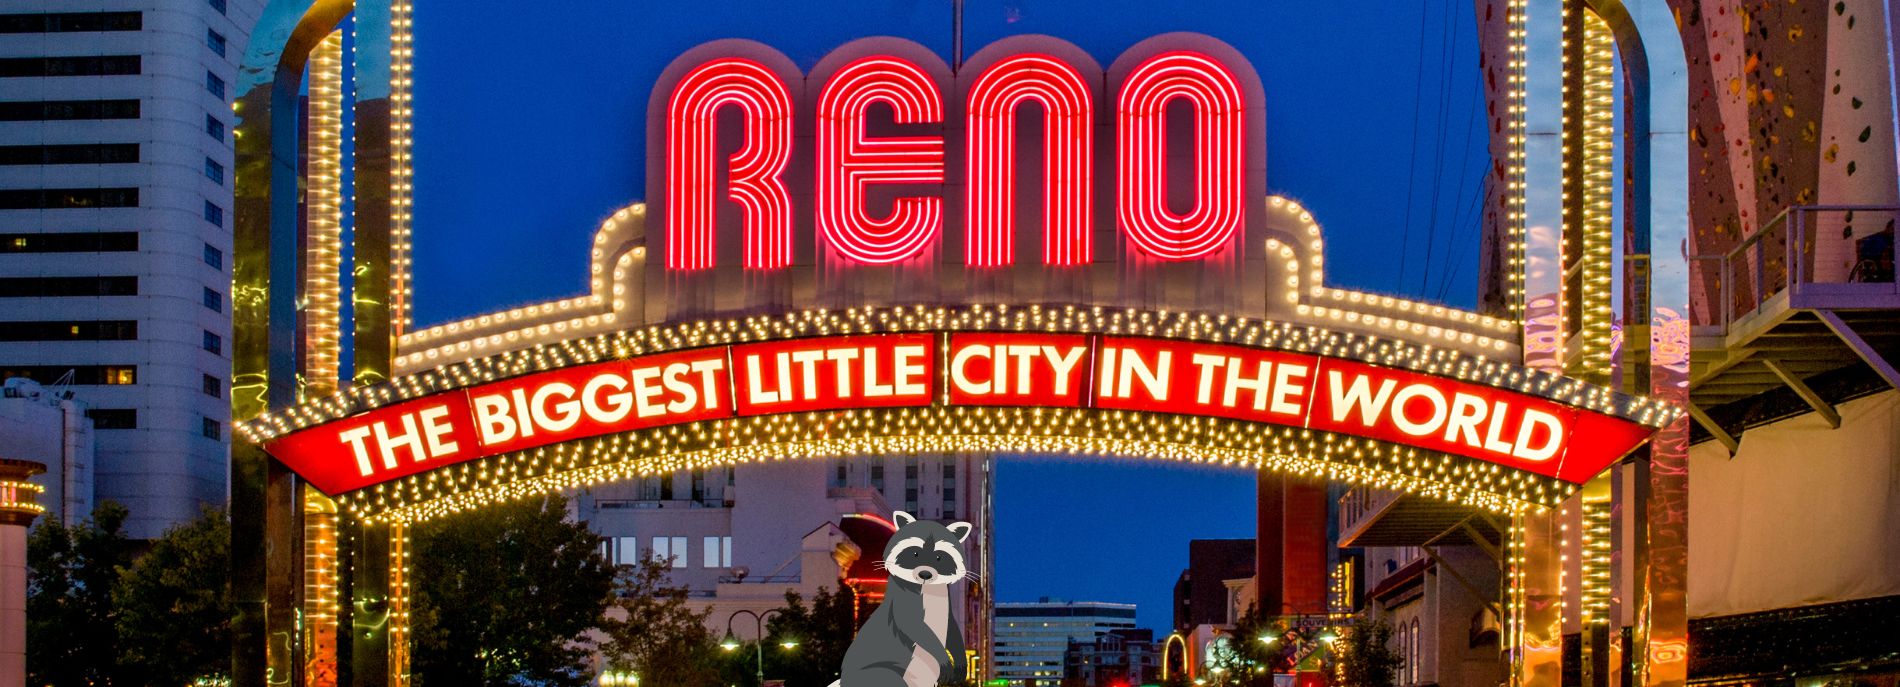 Reno, NV - Critter Bros